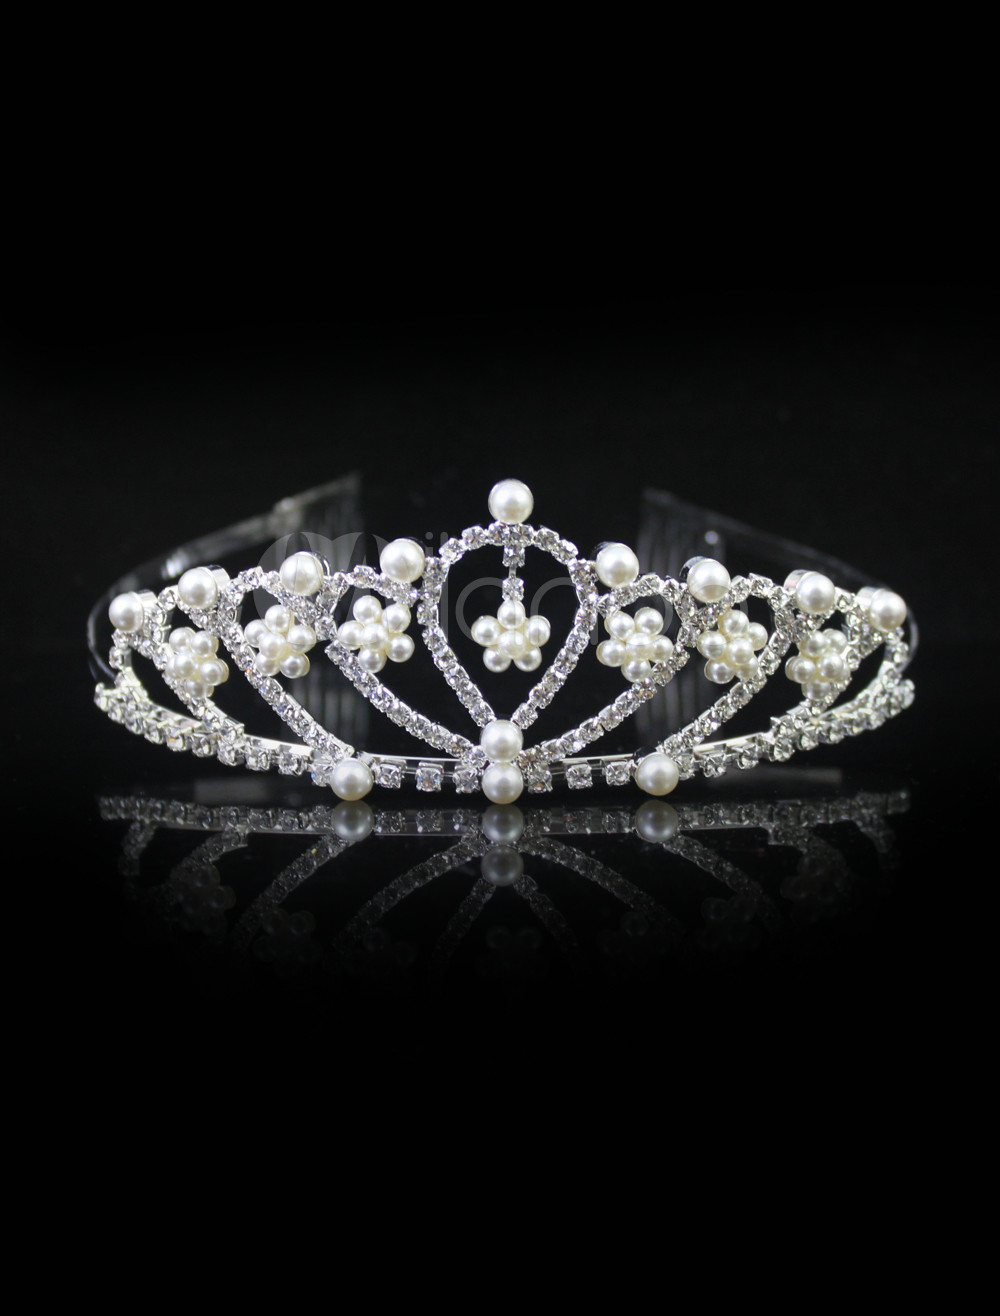 Classic Sweet White Diamond Wedding Tiara Headband - Milanoo.com